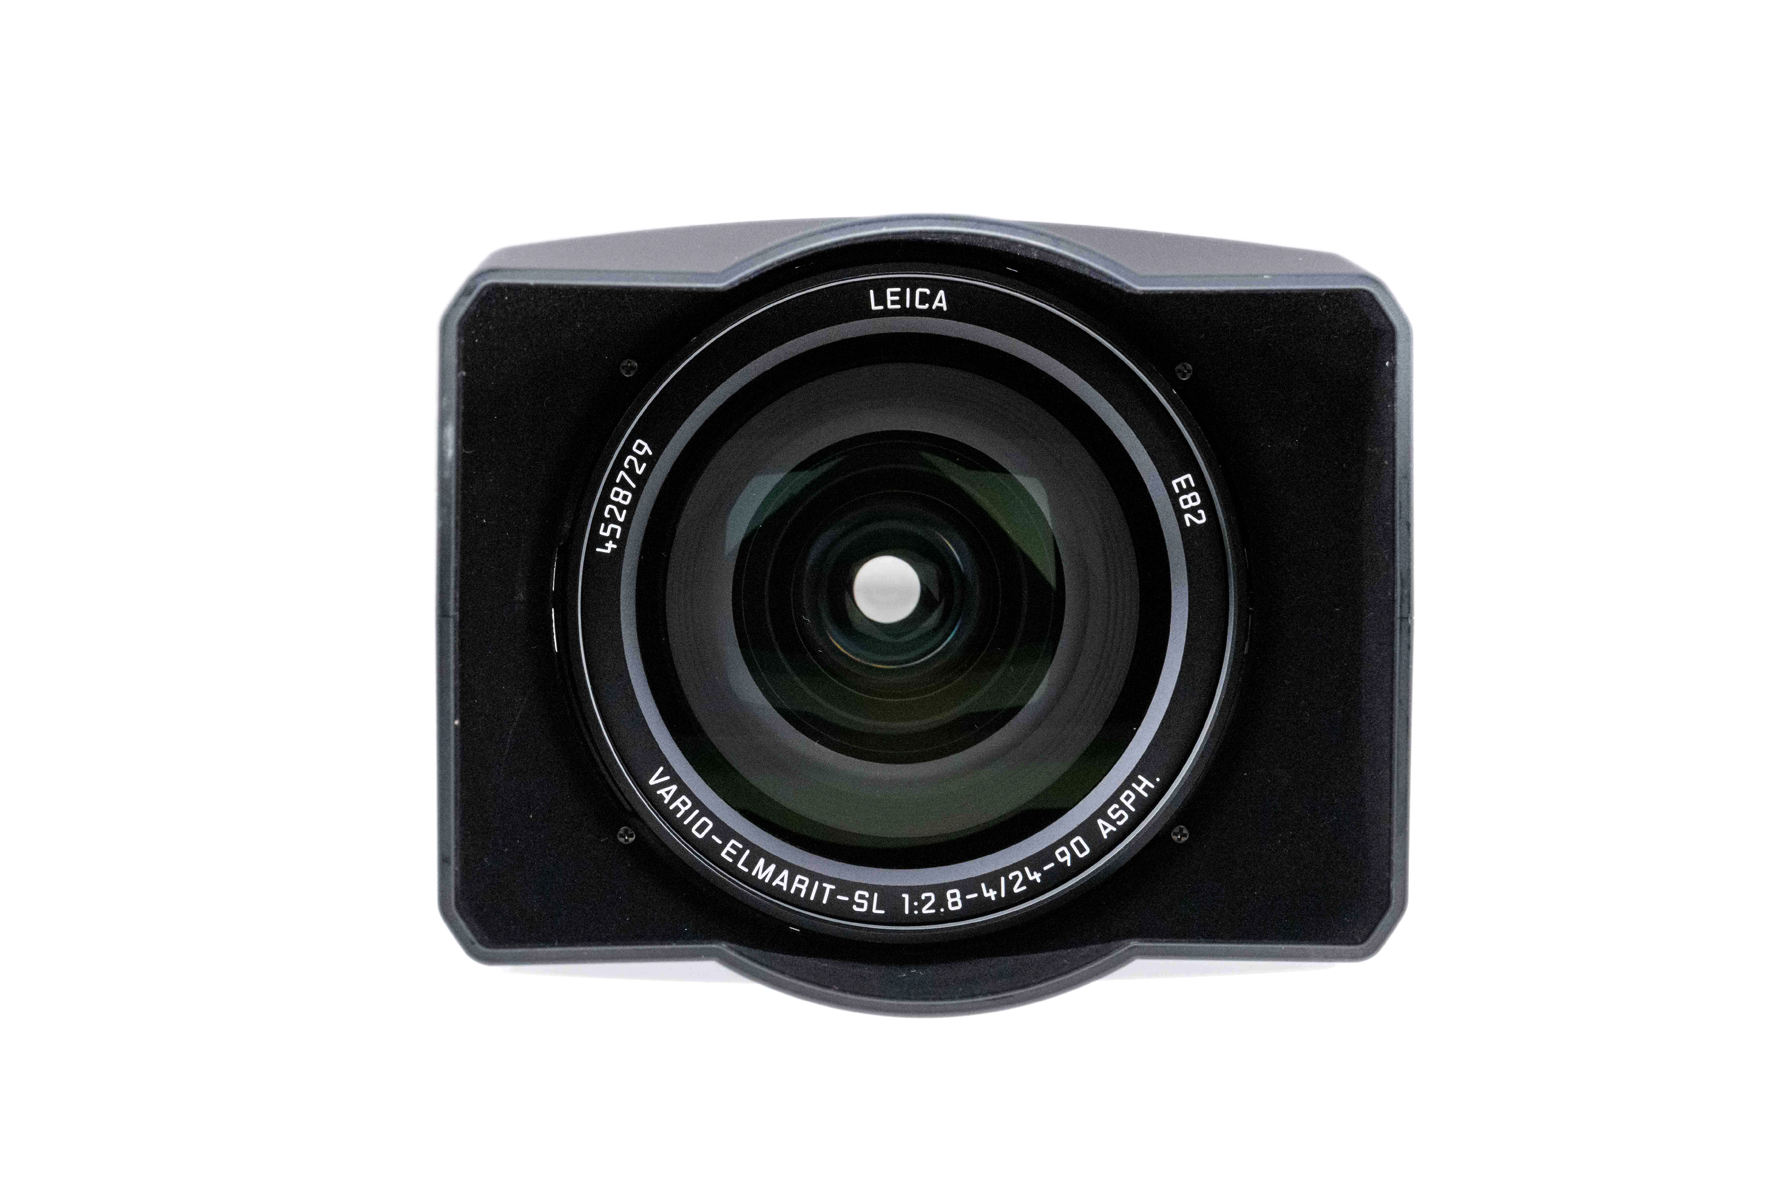  Leica Vario-Elmarit-SL 2,8-4,0/24-90mm ASPH. 